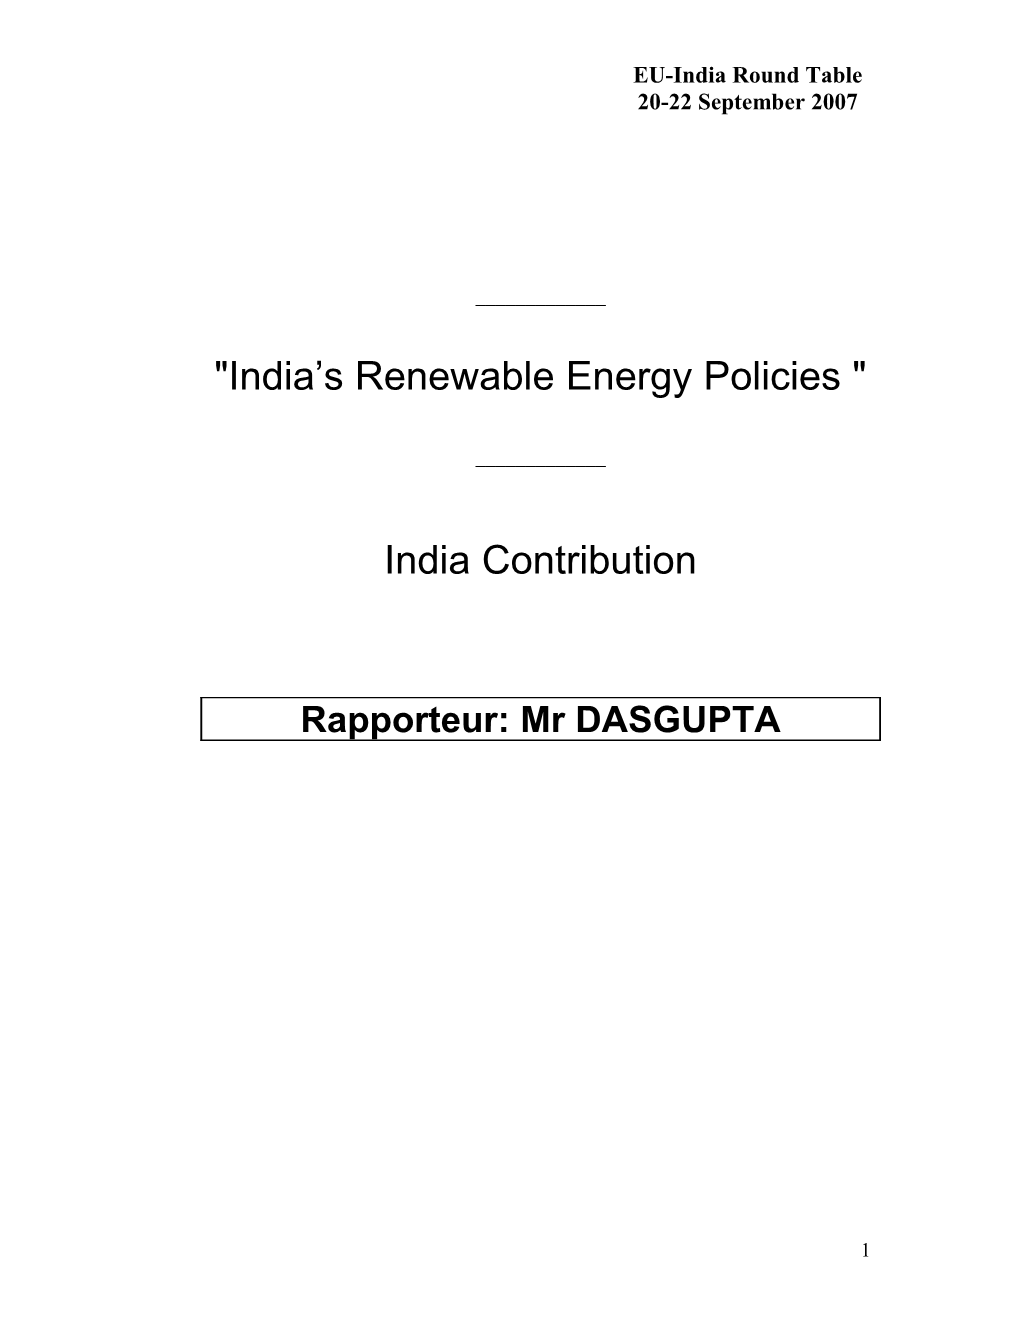 India S Renewable Energy Policies